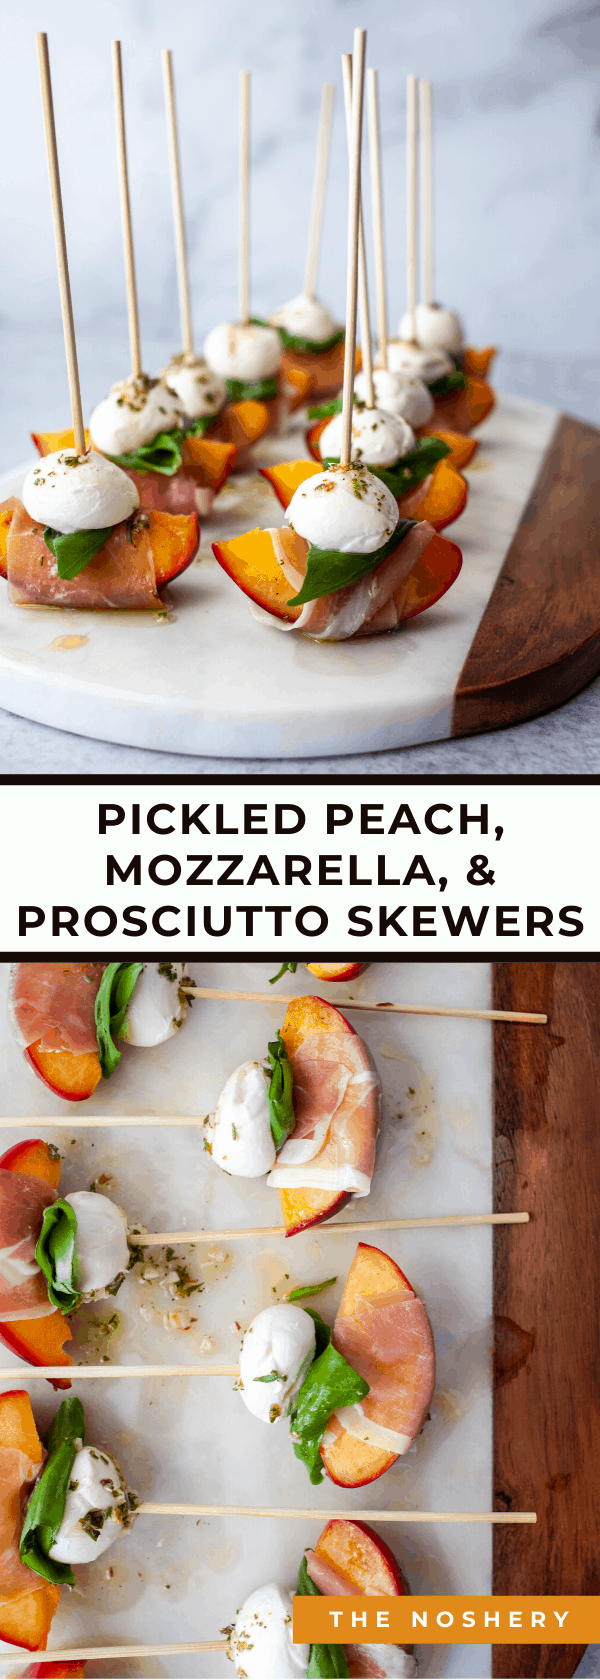 Mozzarella, Prosciutto, and Pickled Peach Appetizer Skewers - The Noshery